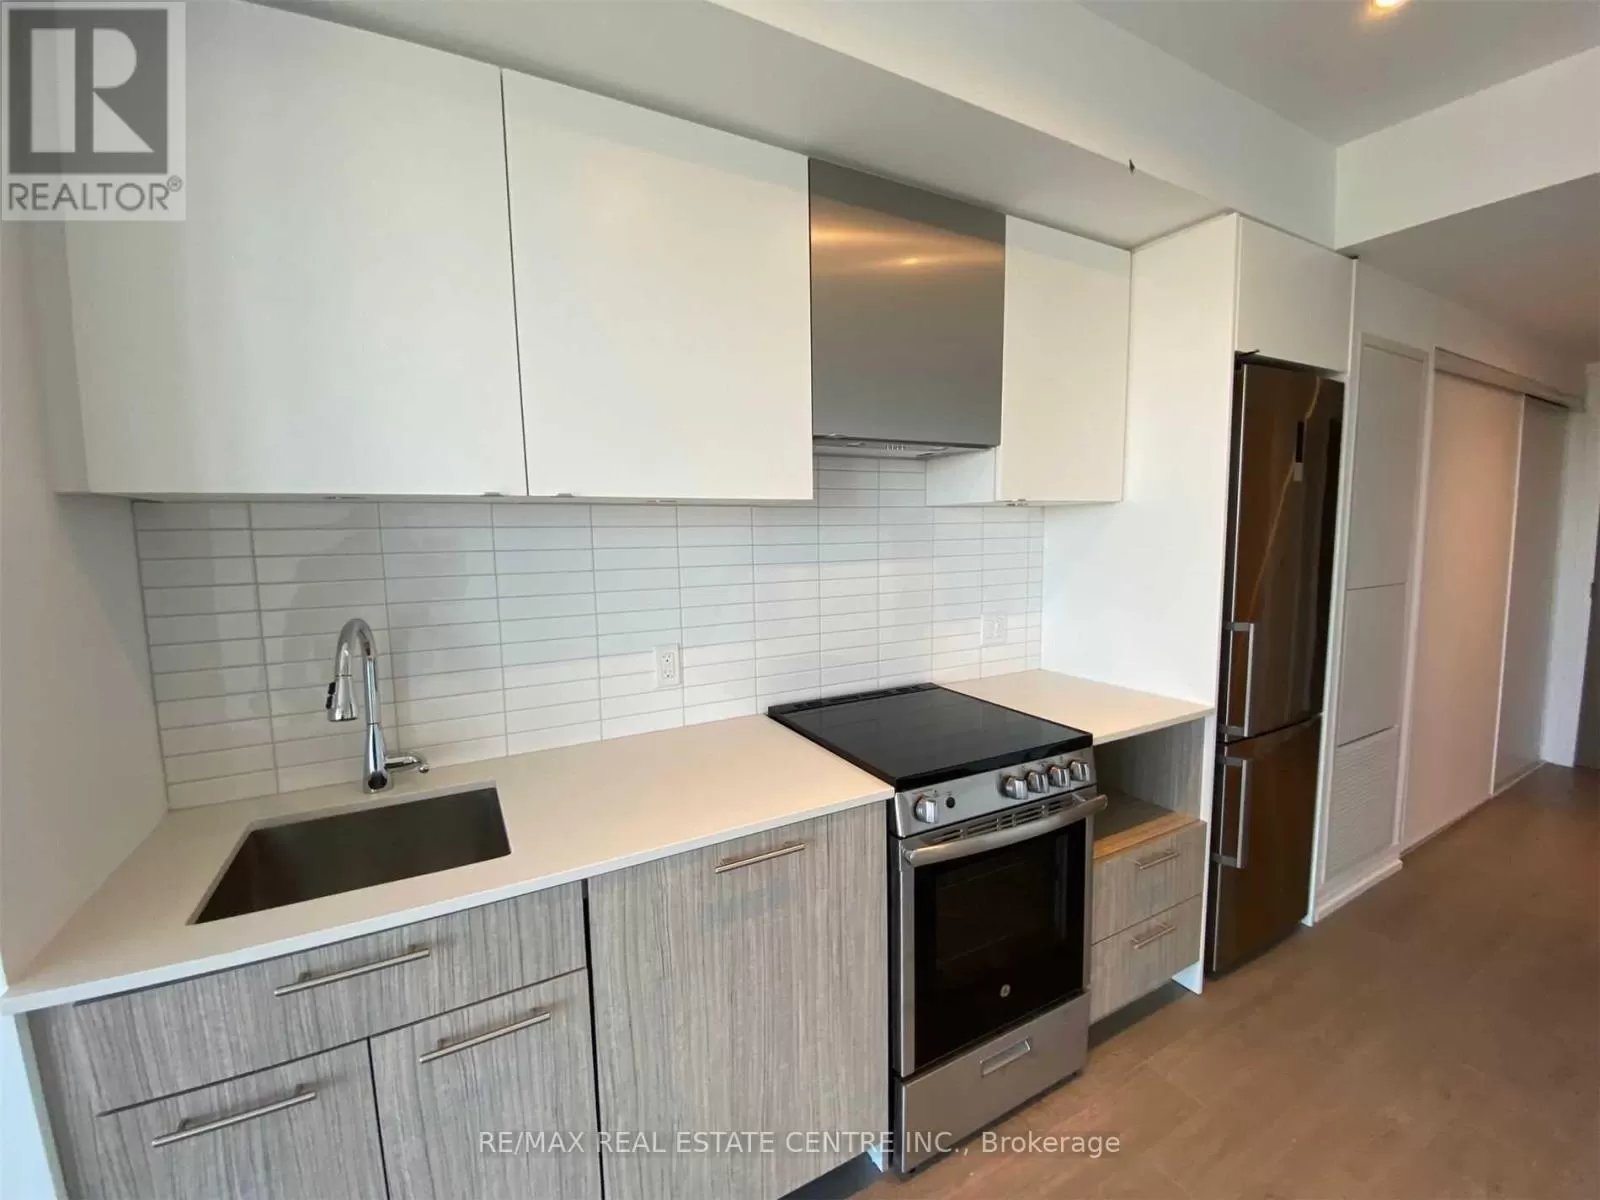 Apartment for rent: 1613 - 251 Jarvis Street E, Toronto, Ontario M5B 0C3